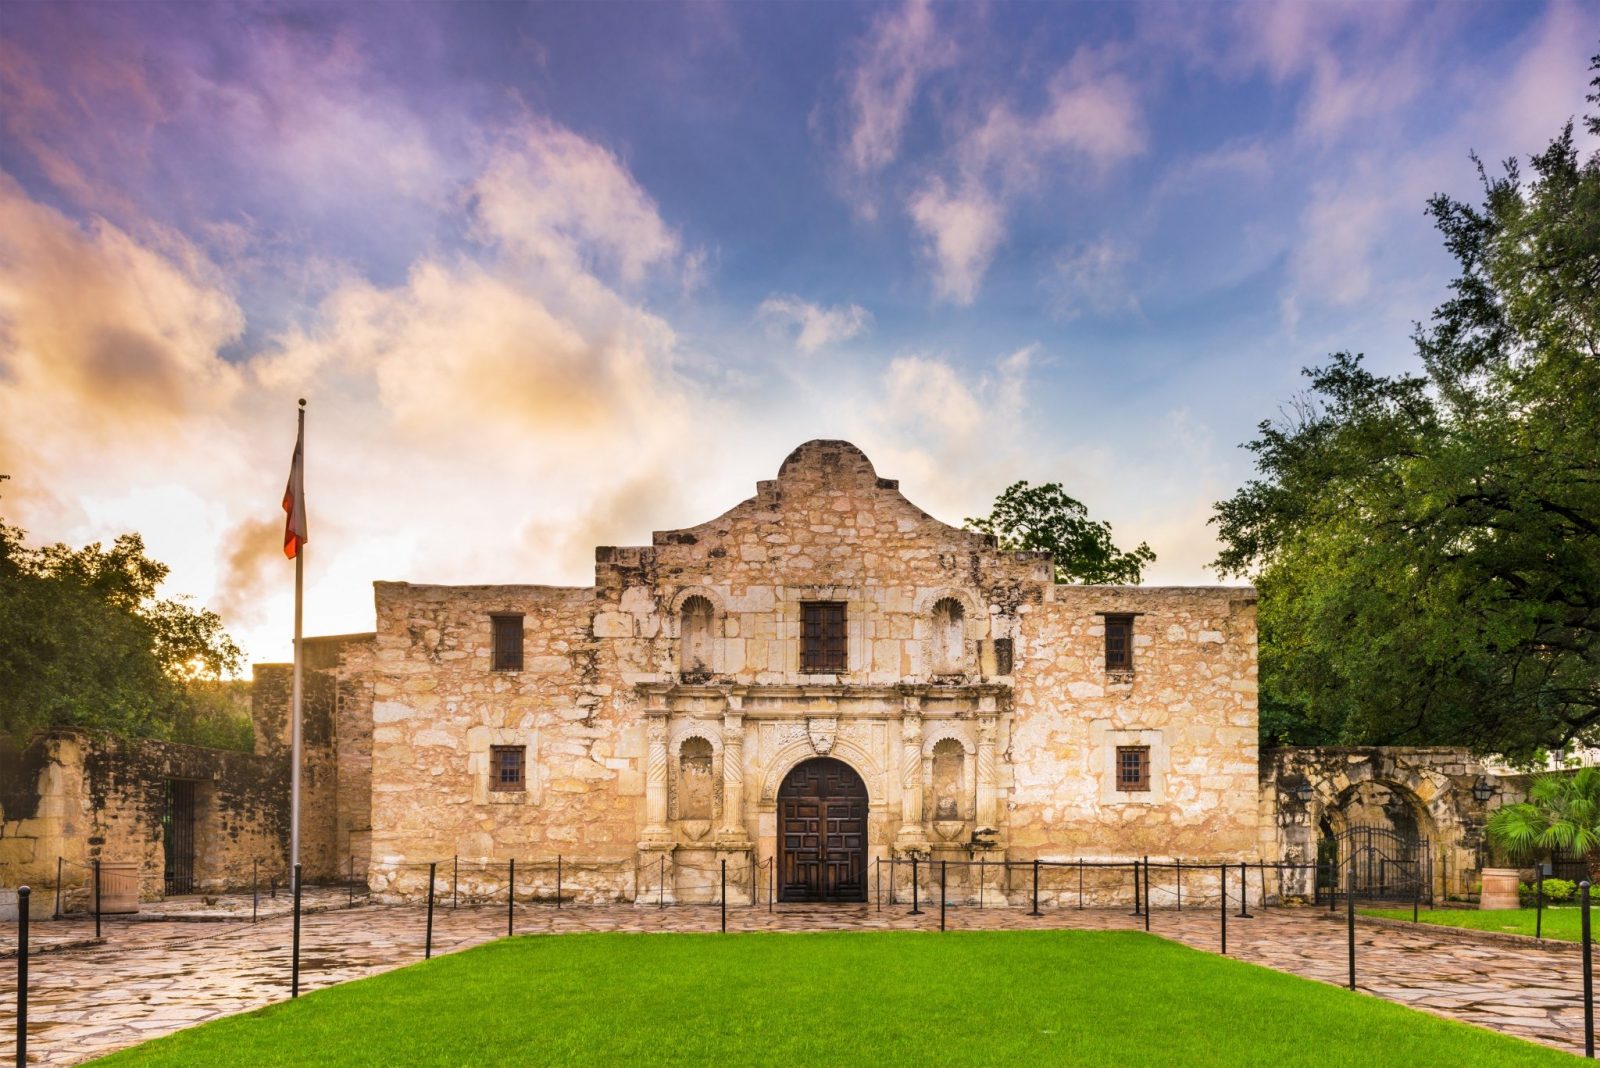 1800s American History Quiz The Alamo